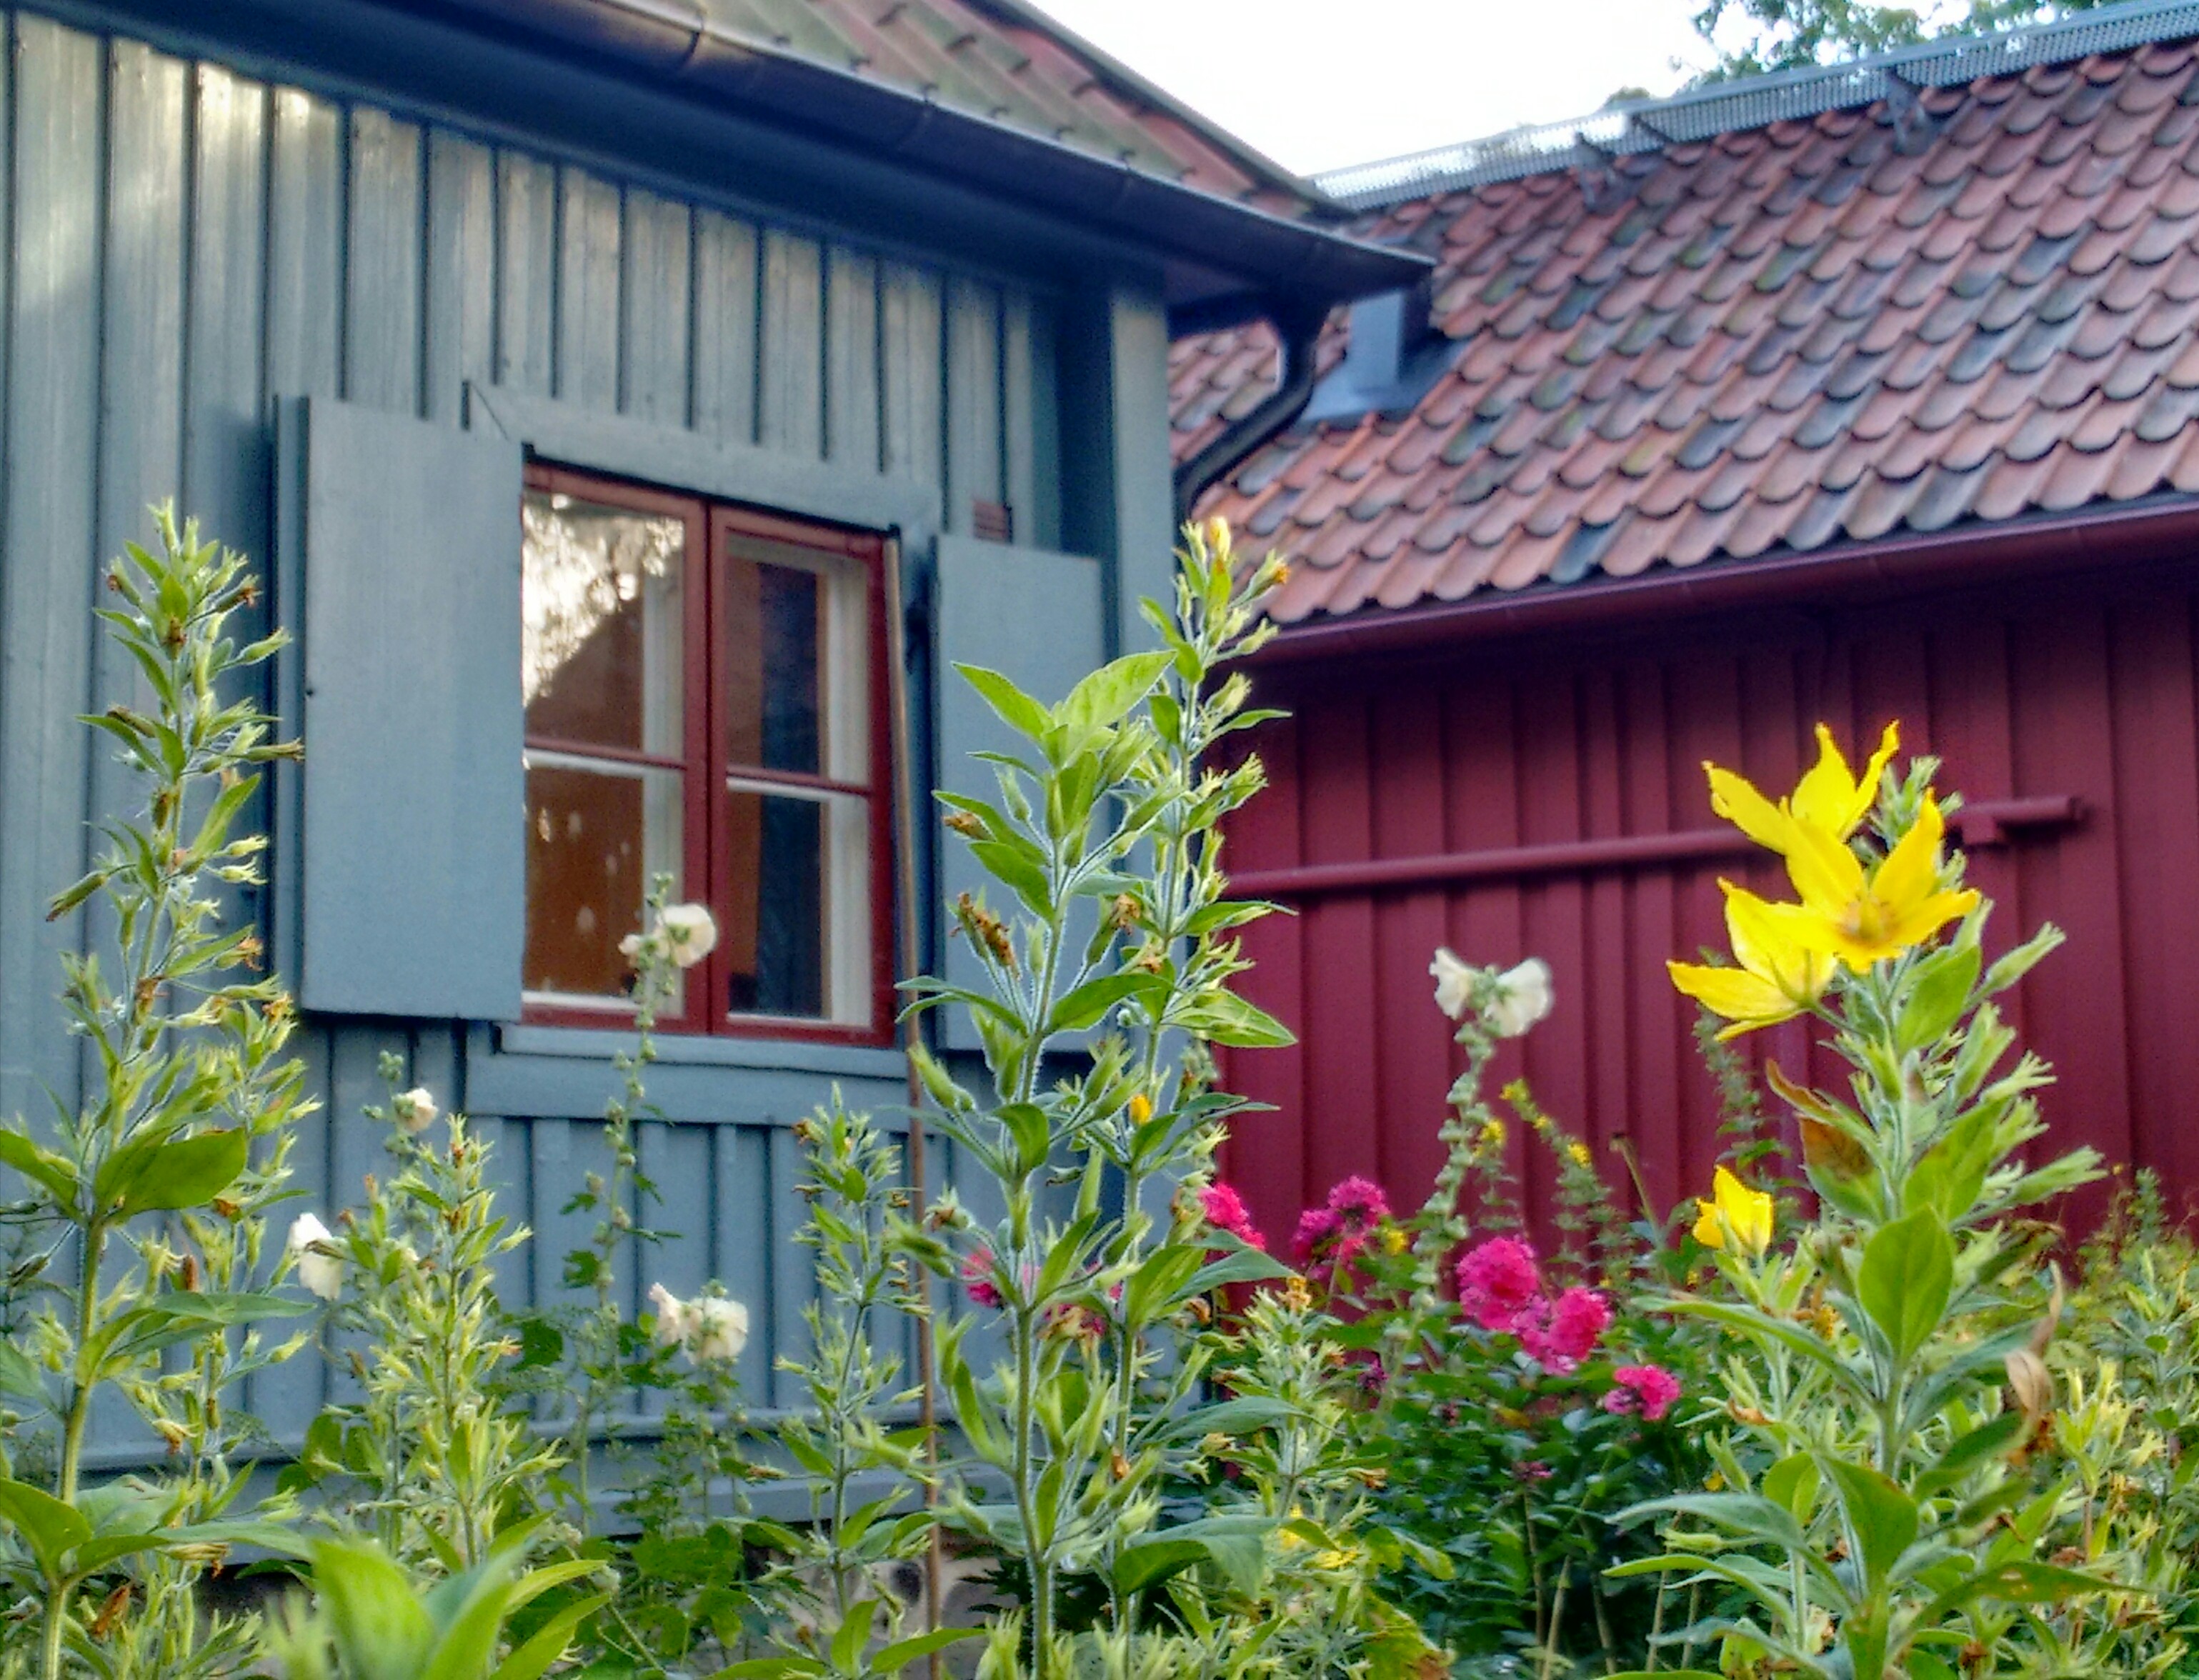 Gothenburg houses.jpg